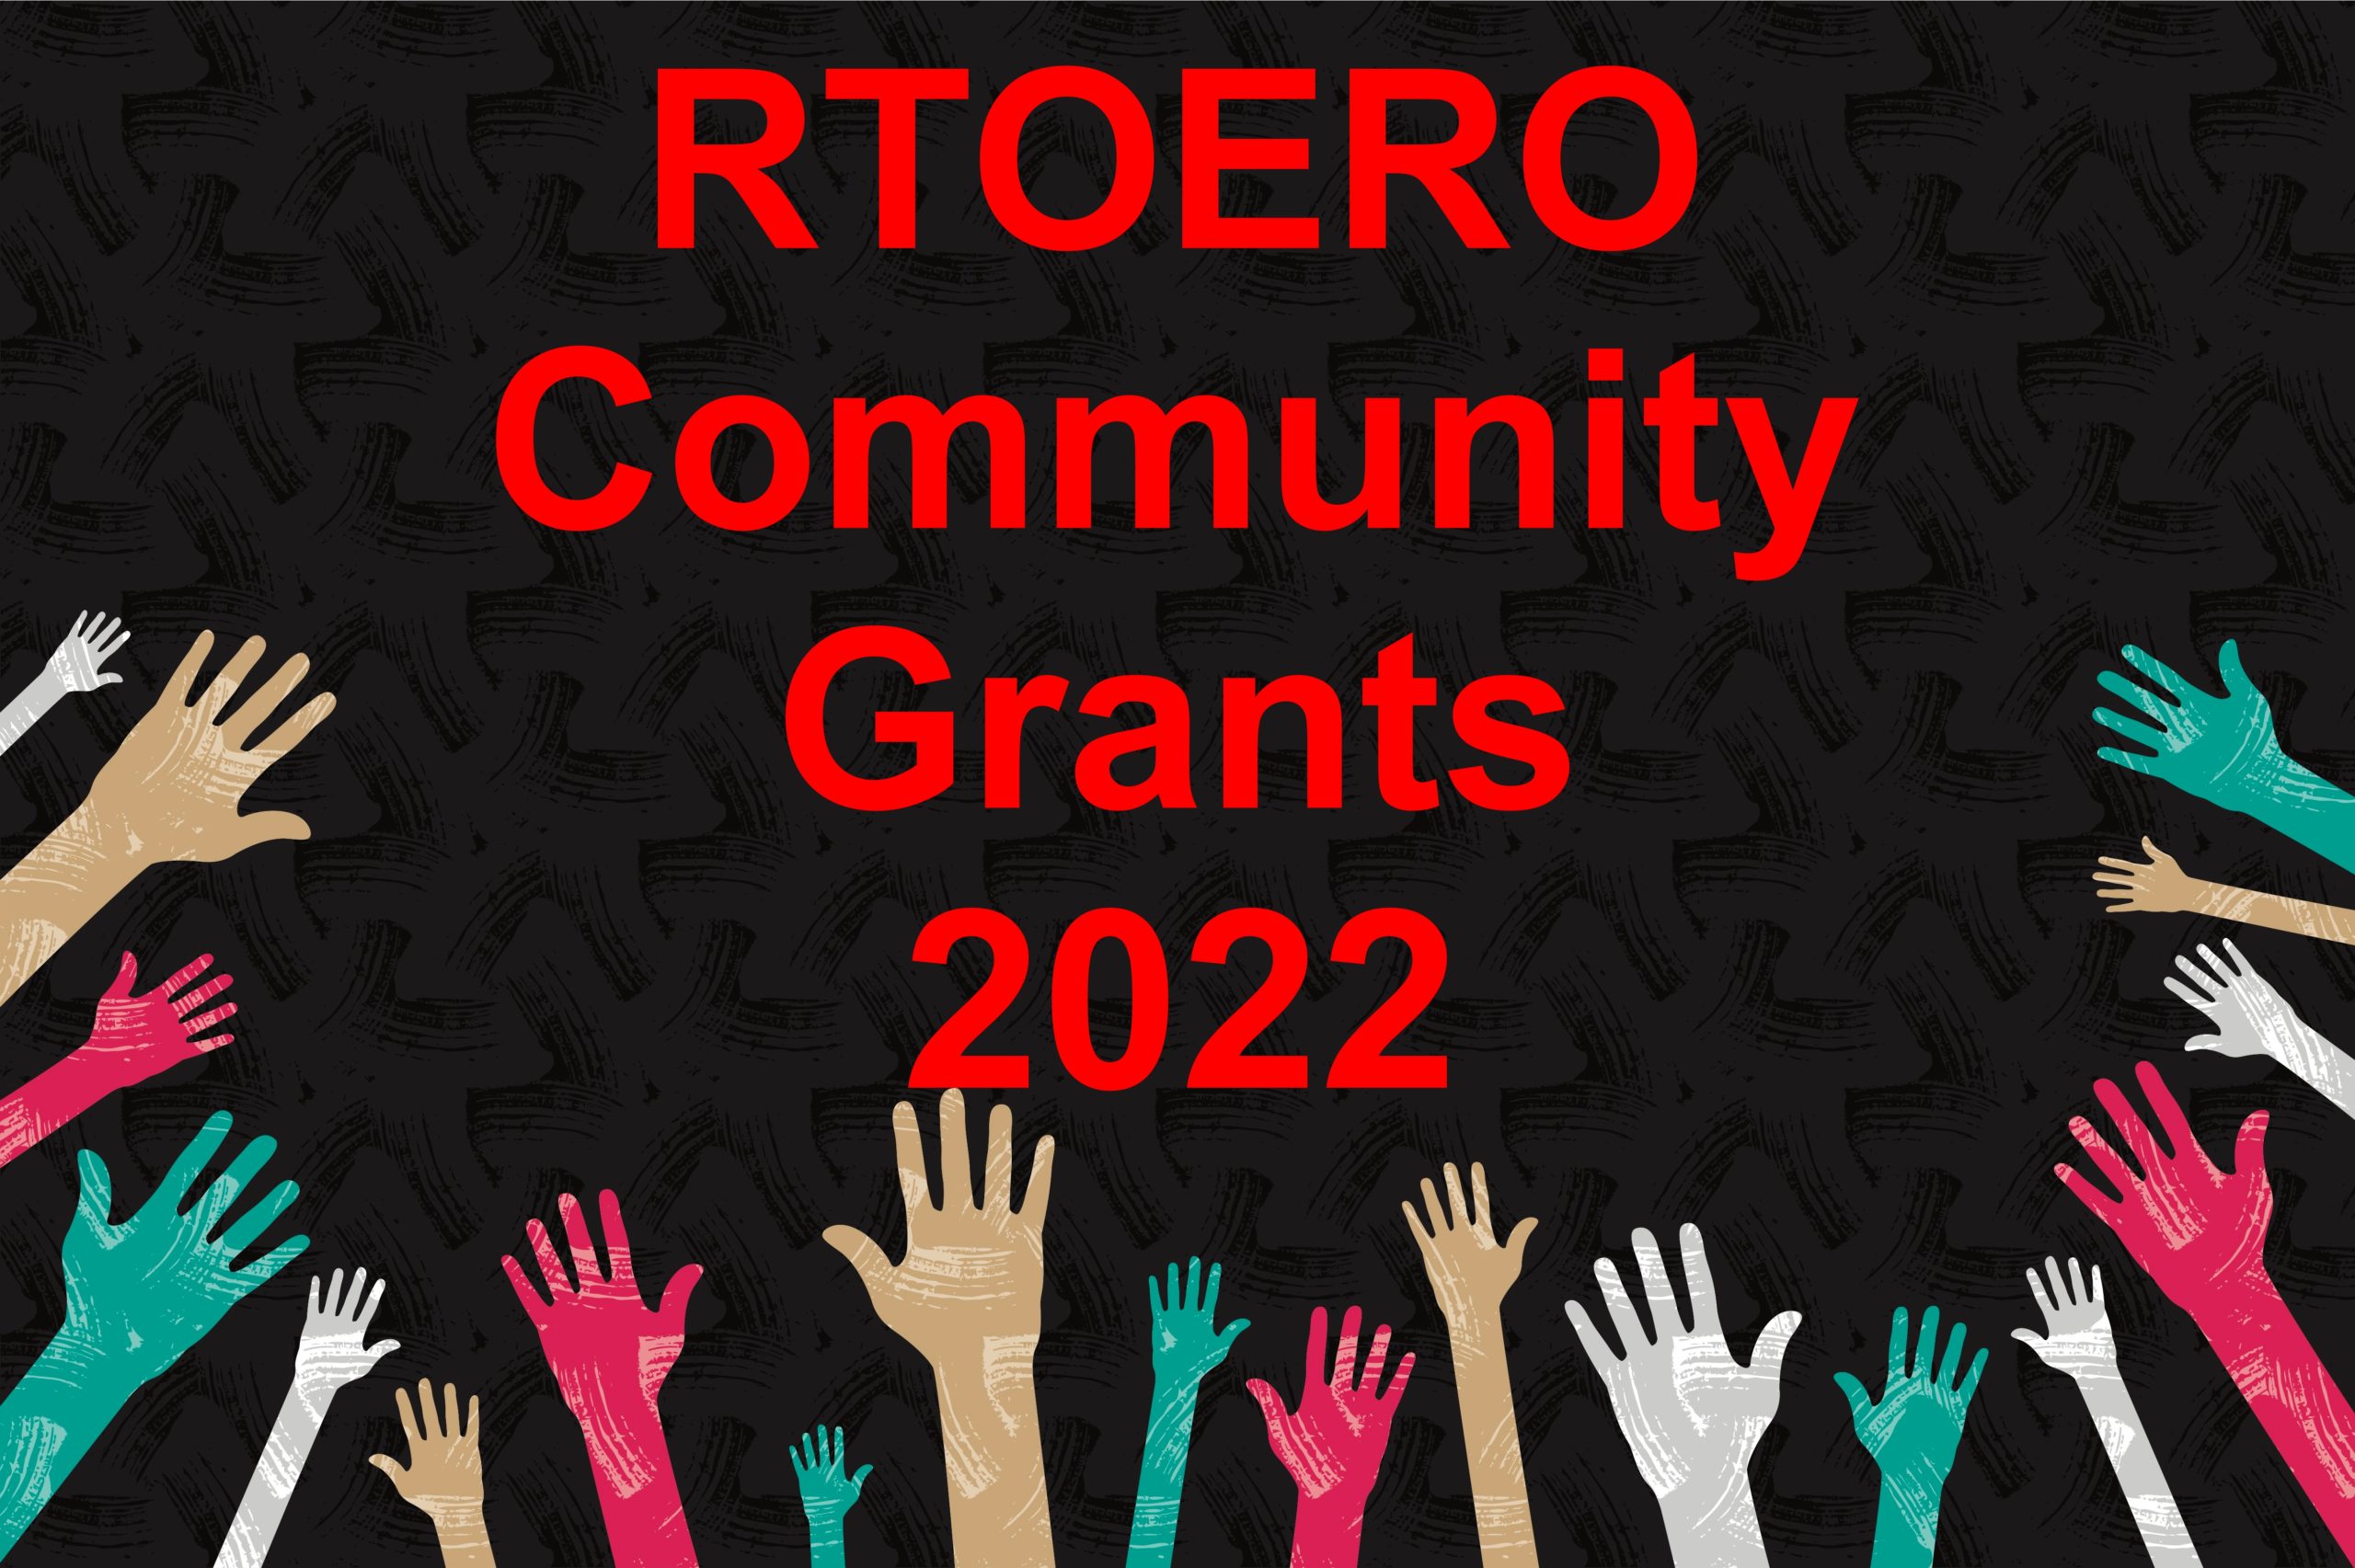 RTOERO Community Grants 2022